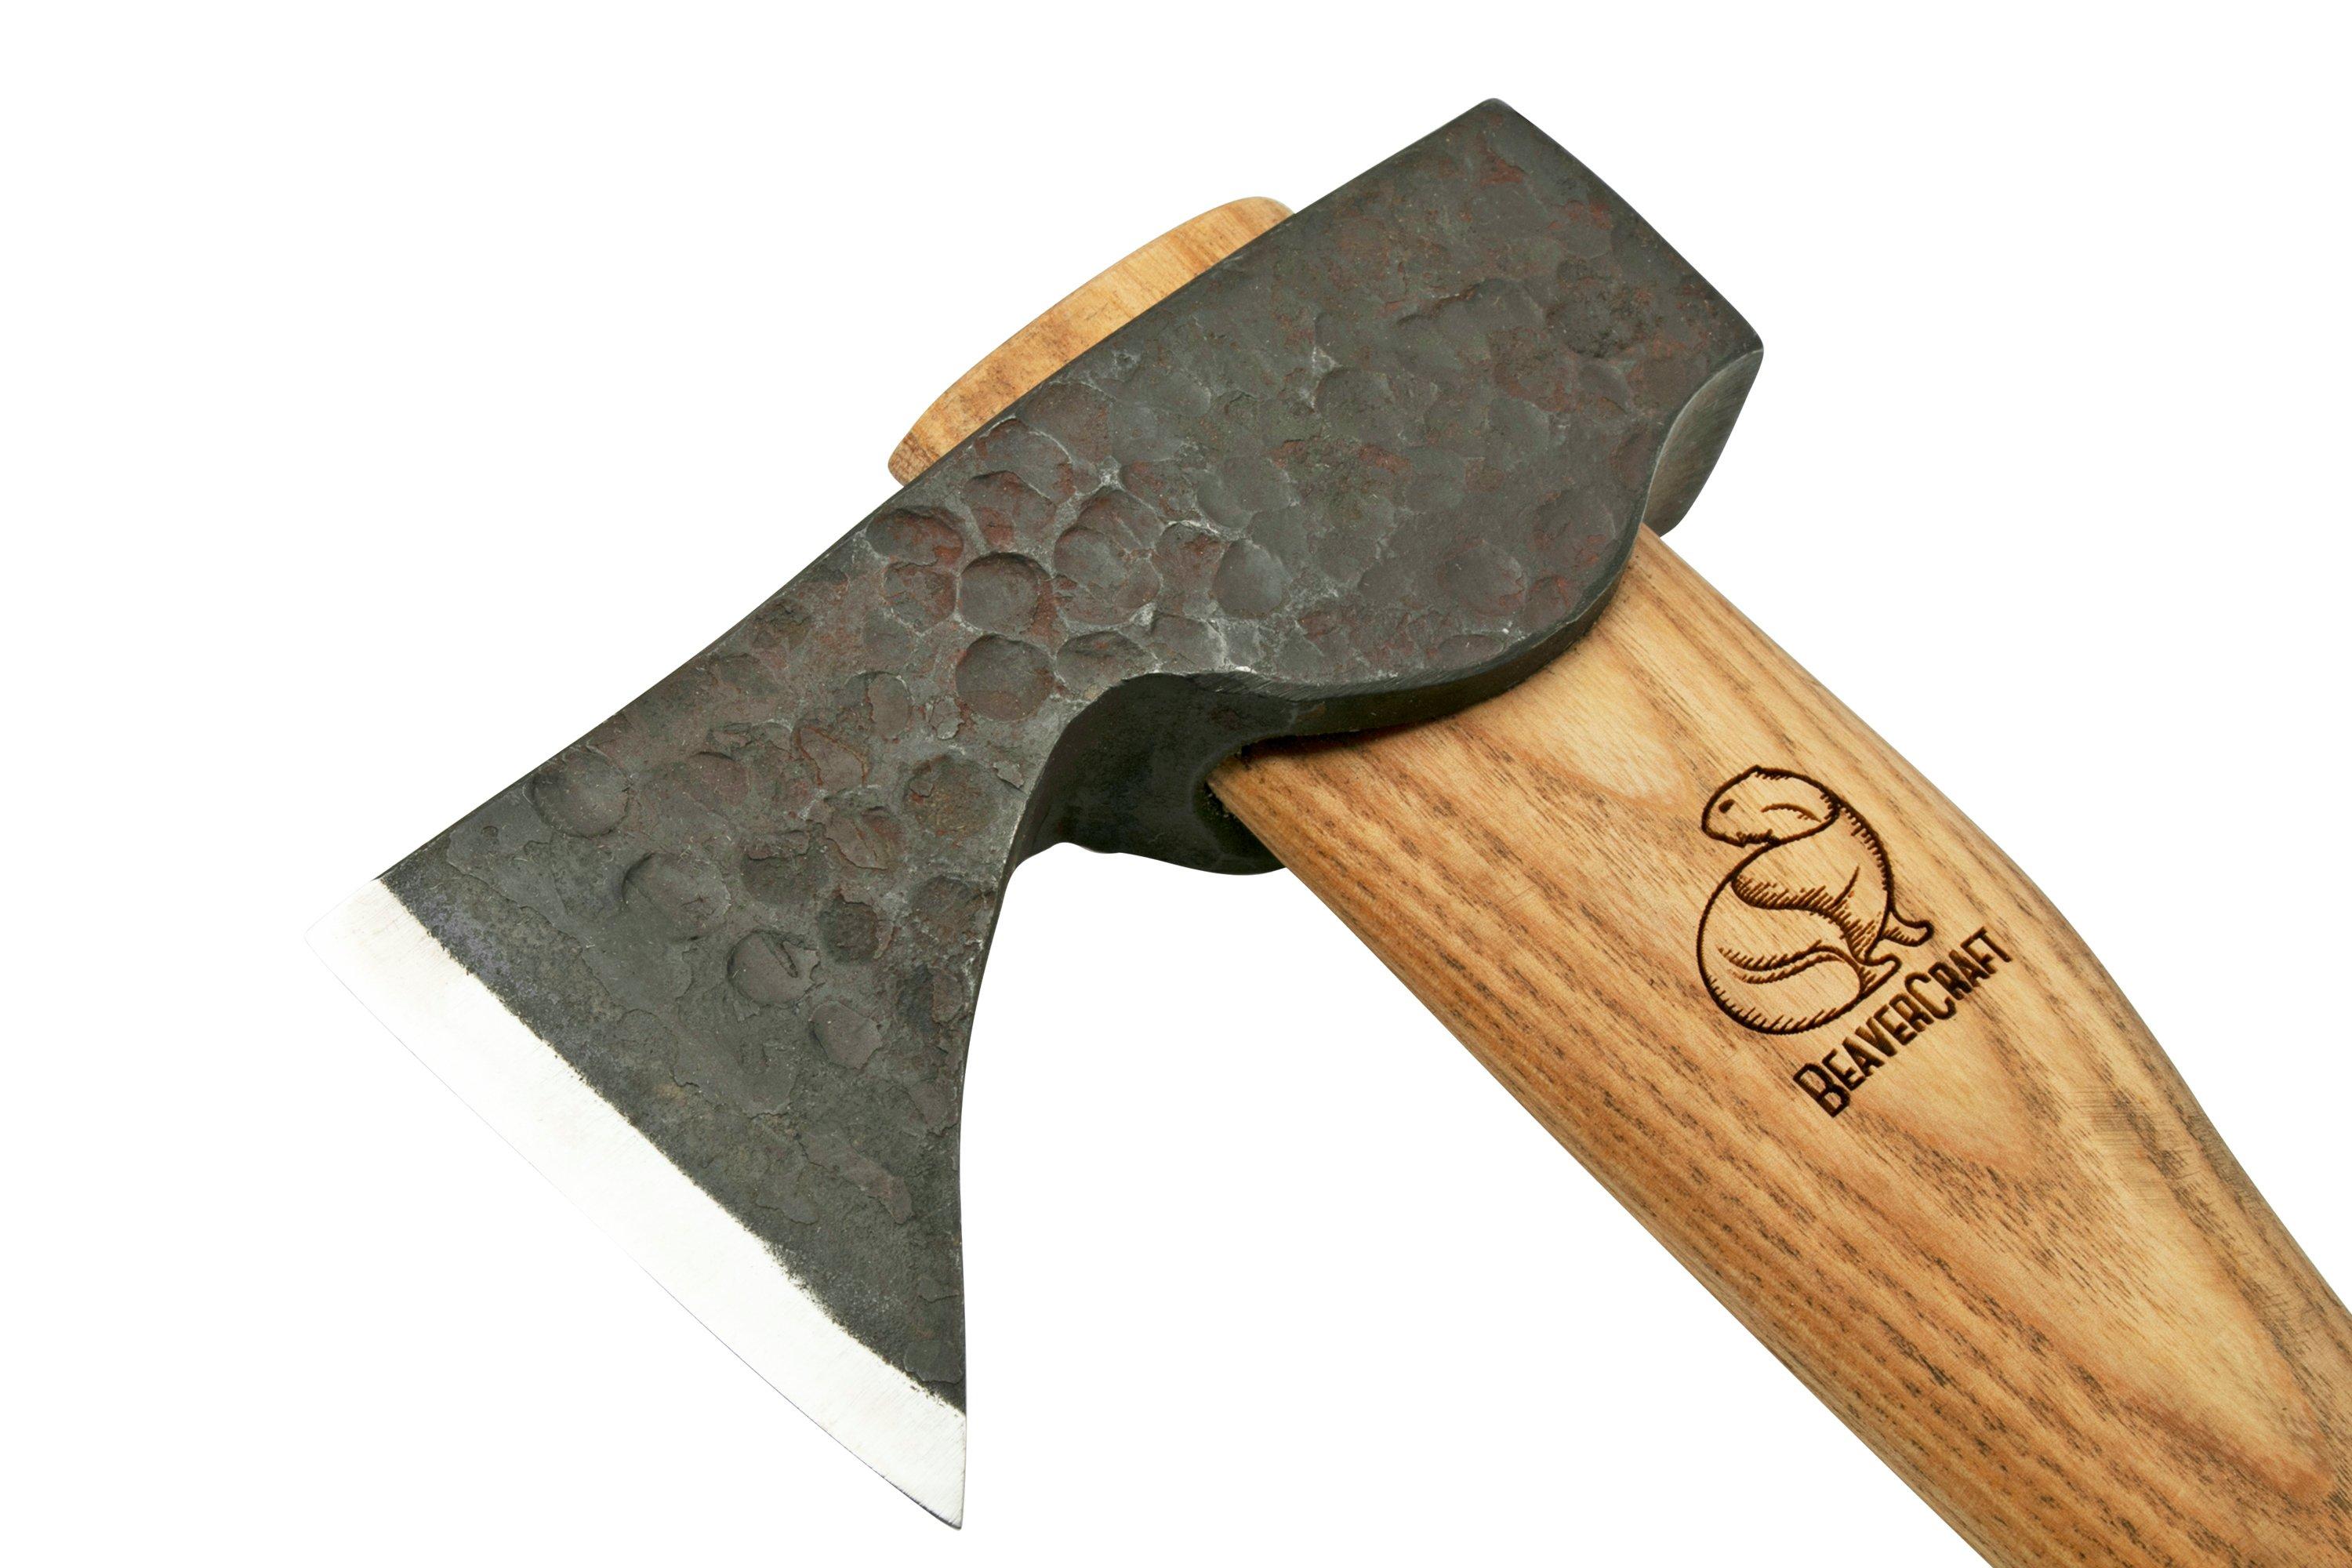 BeaverCraft AX1 Carving Axe, hand axe  Advantageously shopping at